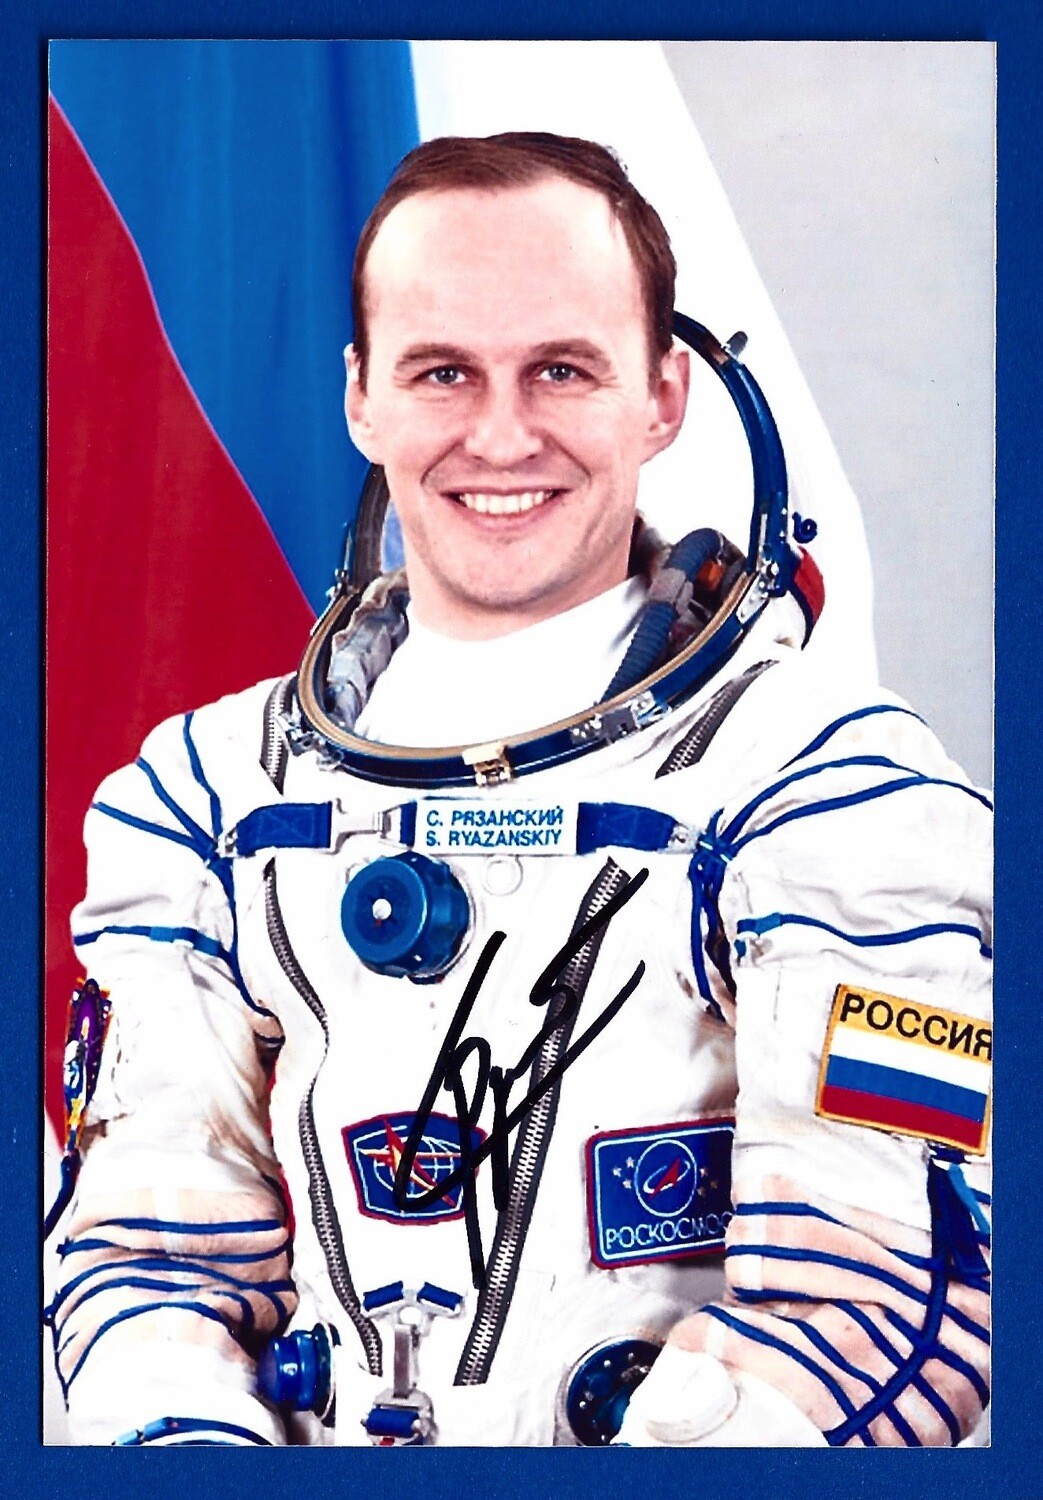 Sergey Ryazansky Russian cosmonaut signed picture